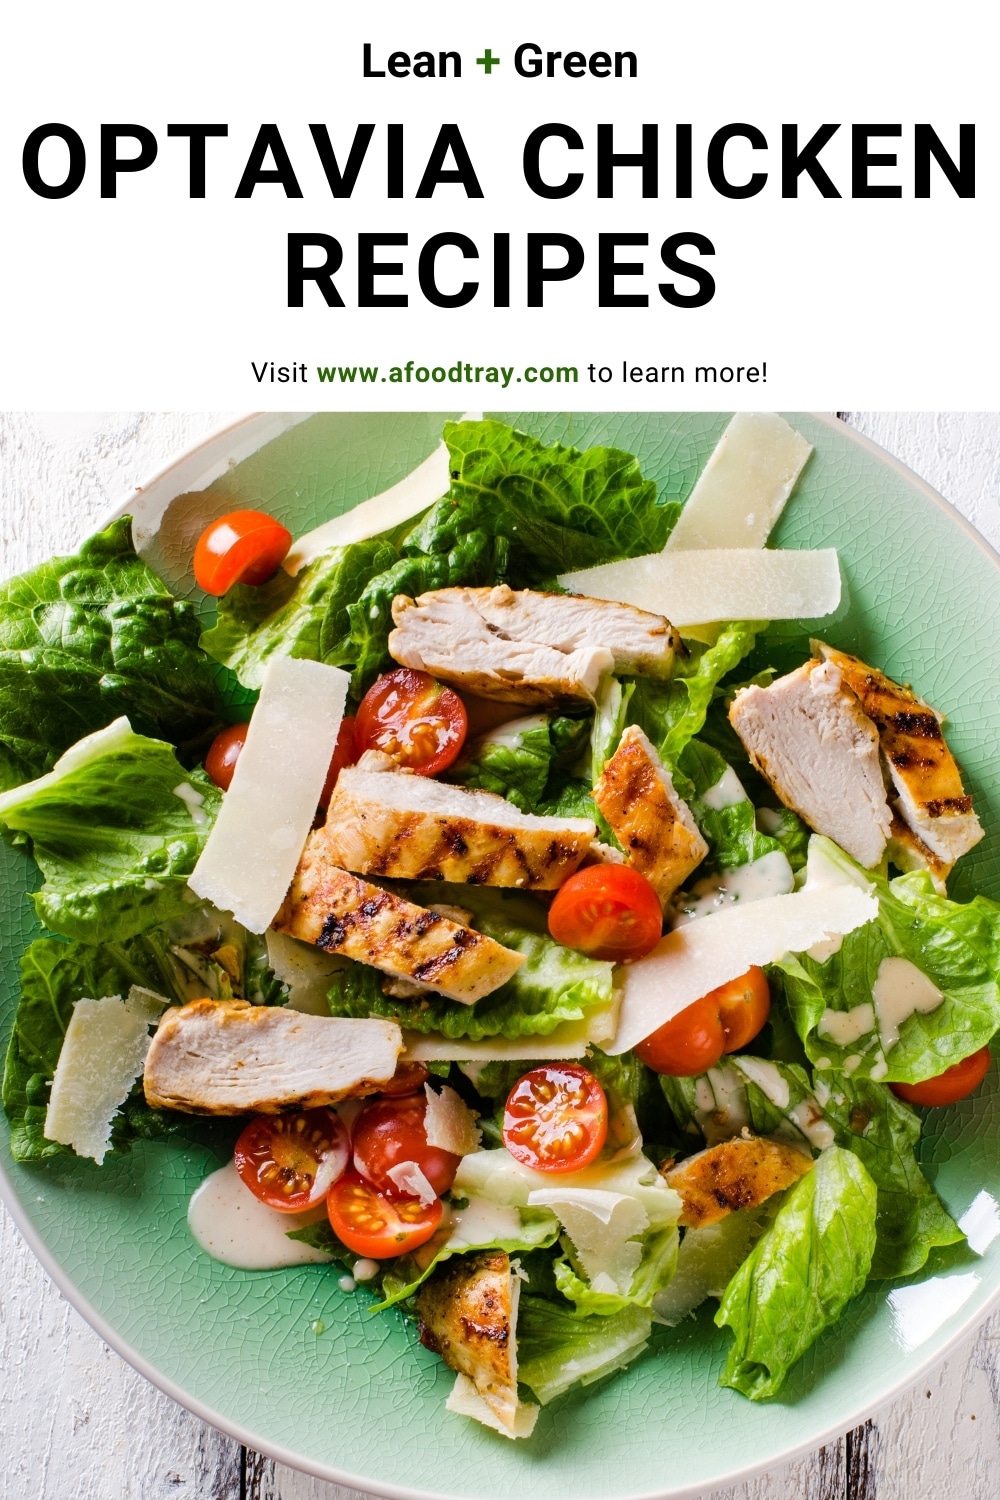 Optavia Chicken Recipes Lean & Green